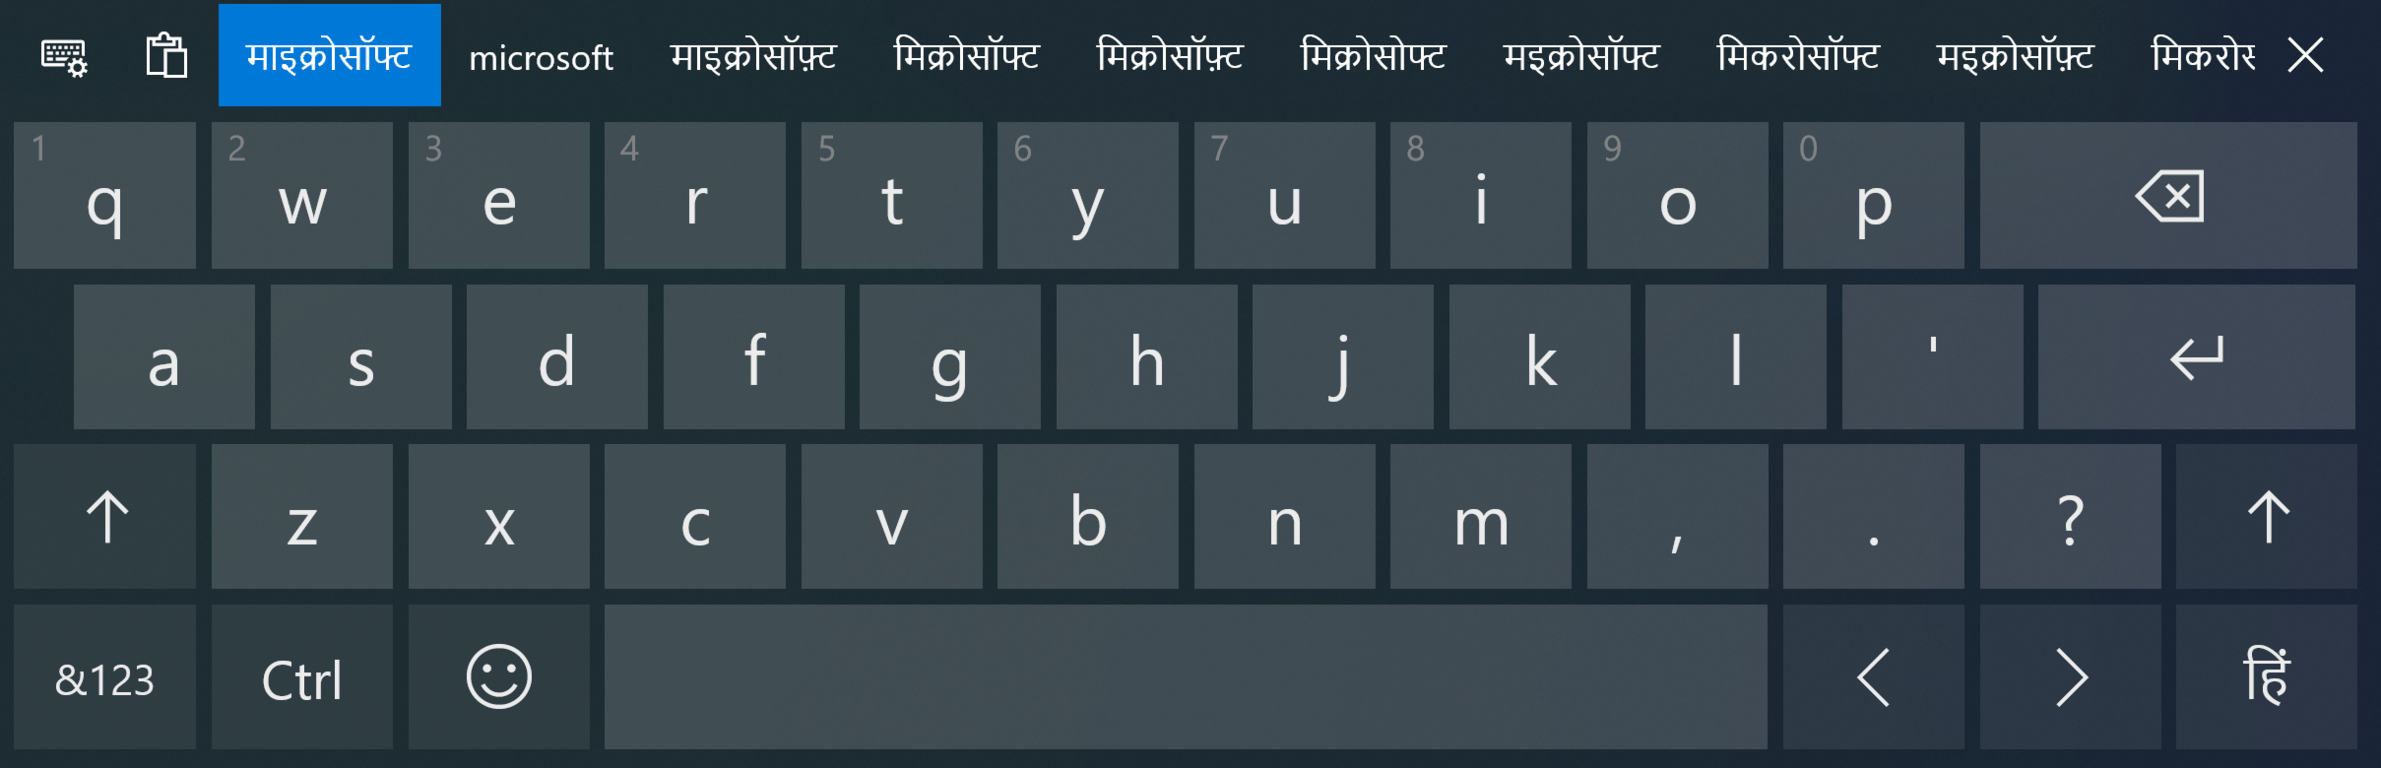 microsoft indic language input tool for hindi